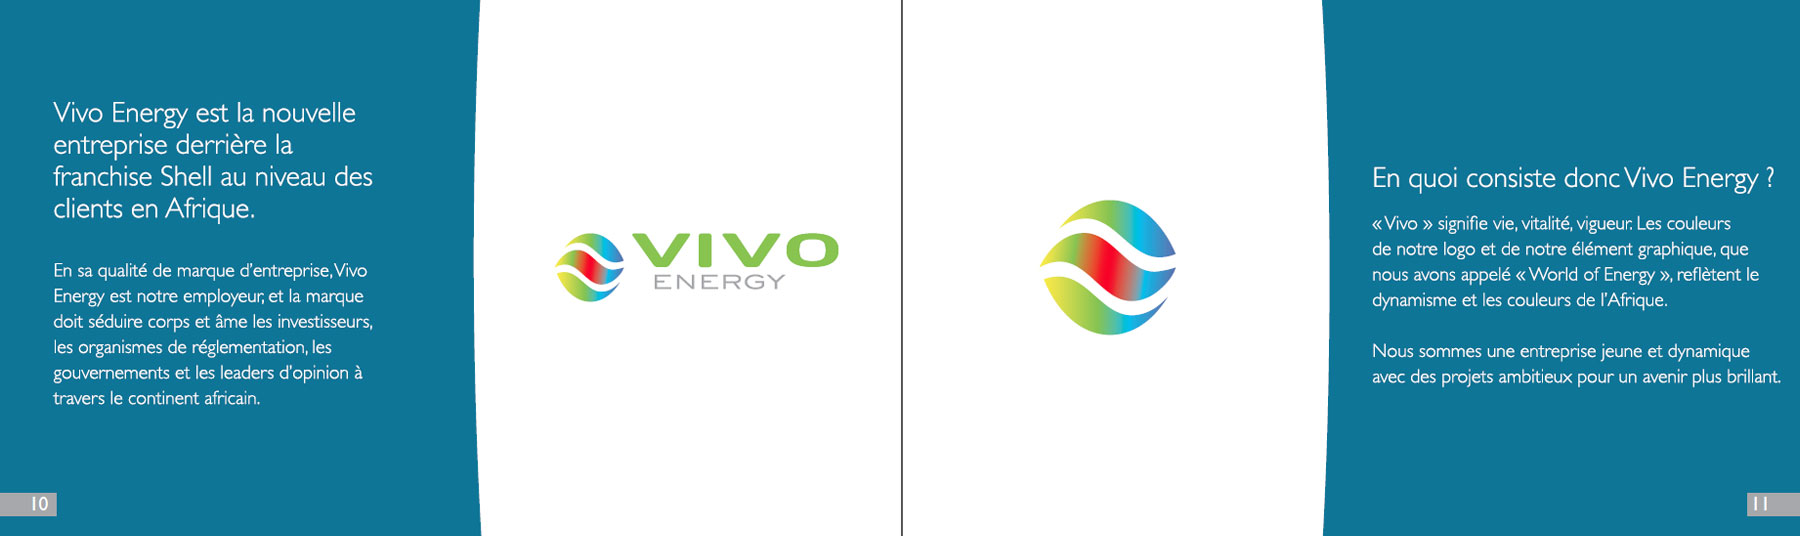 Vivo Energy – Brand book